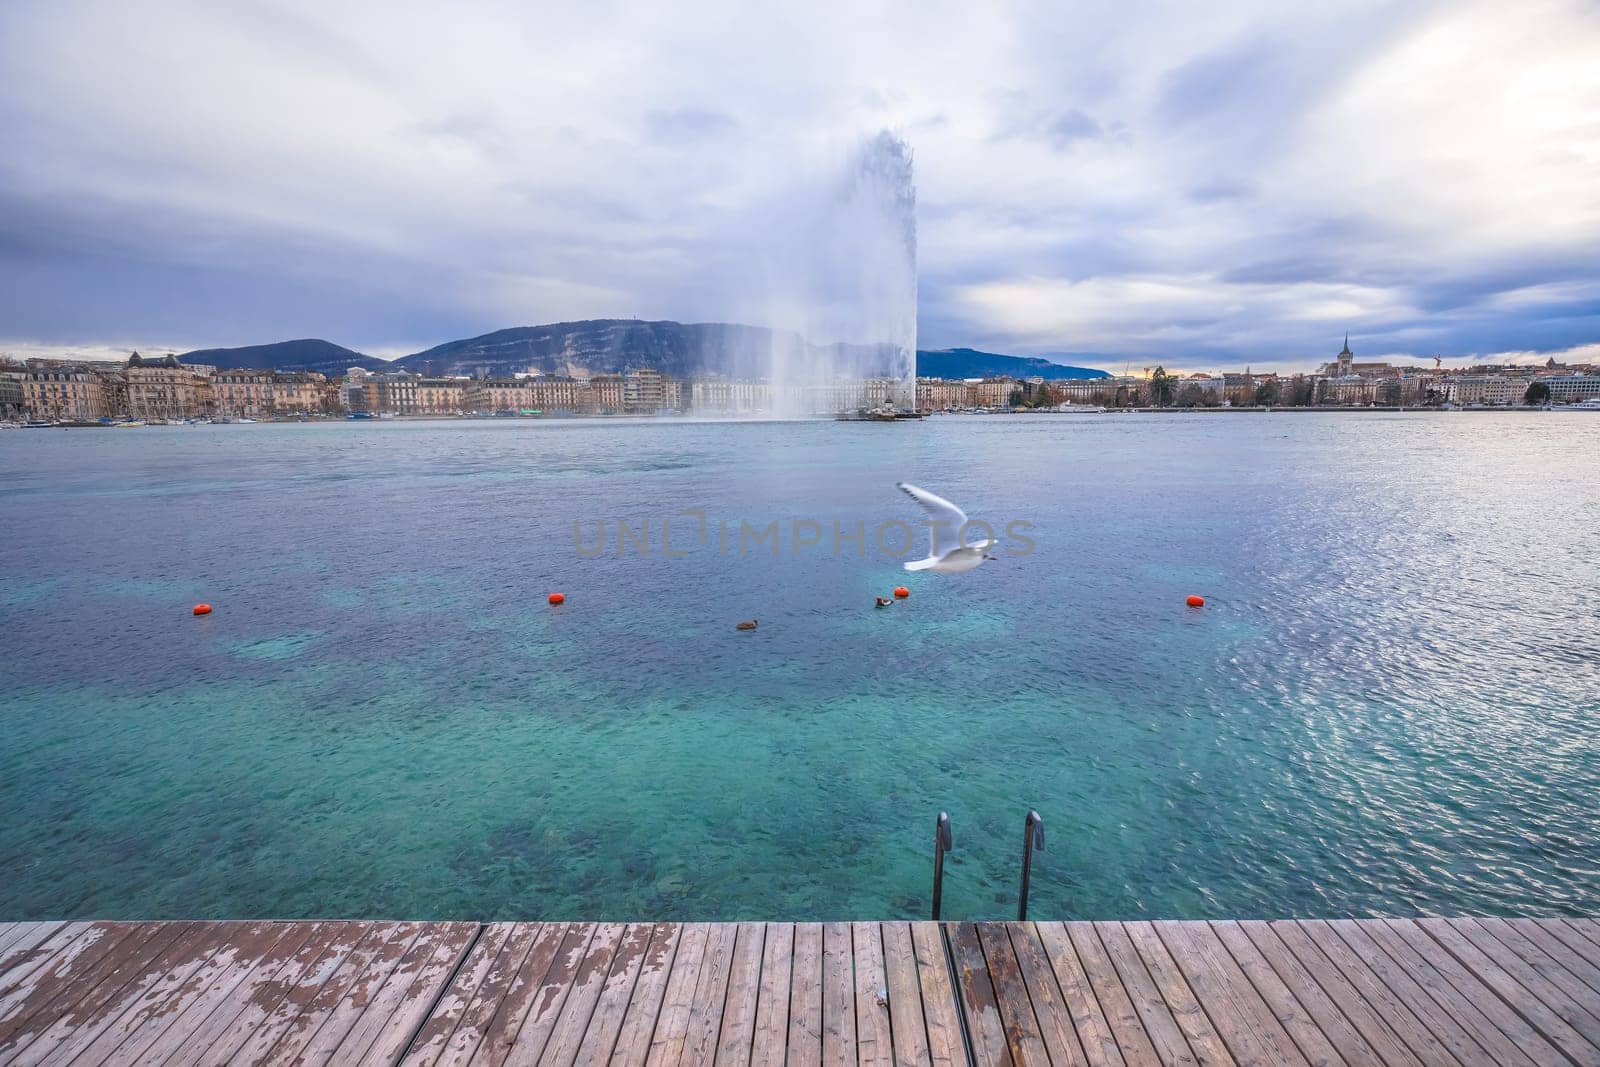 City of Geneva Lac Leman waterfront scenic view by xbrchx